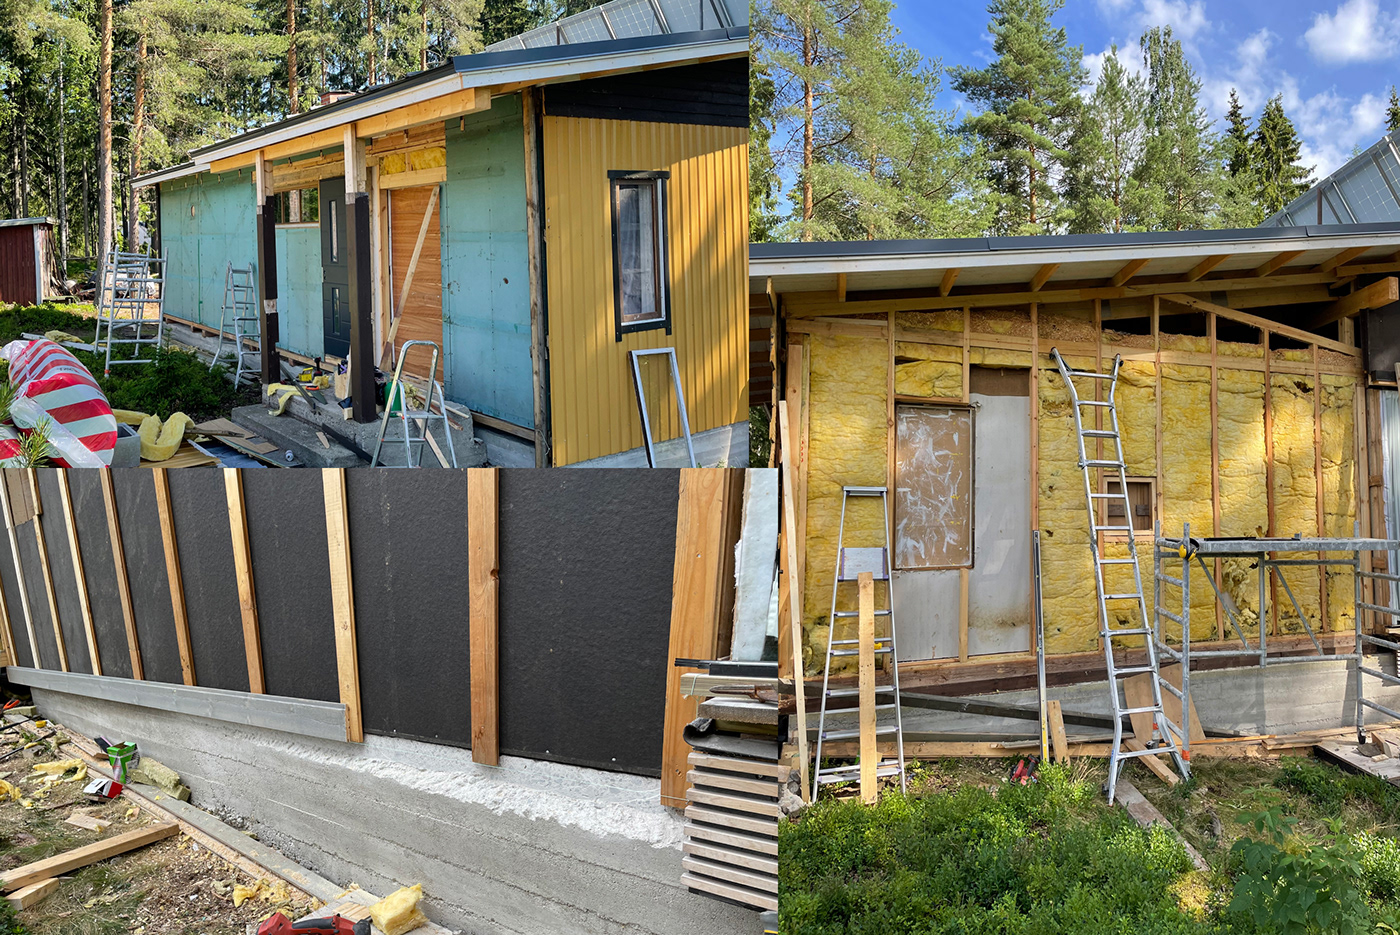 Carpentry construction Craftmanship DIY finland renovation summer cottage traditional renovation woodworking